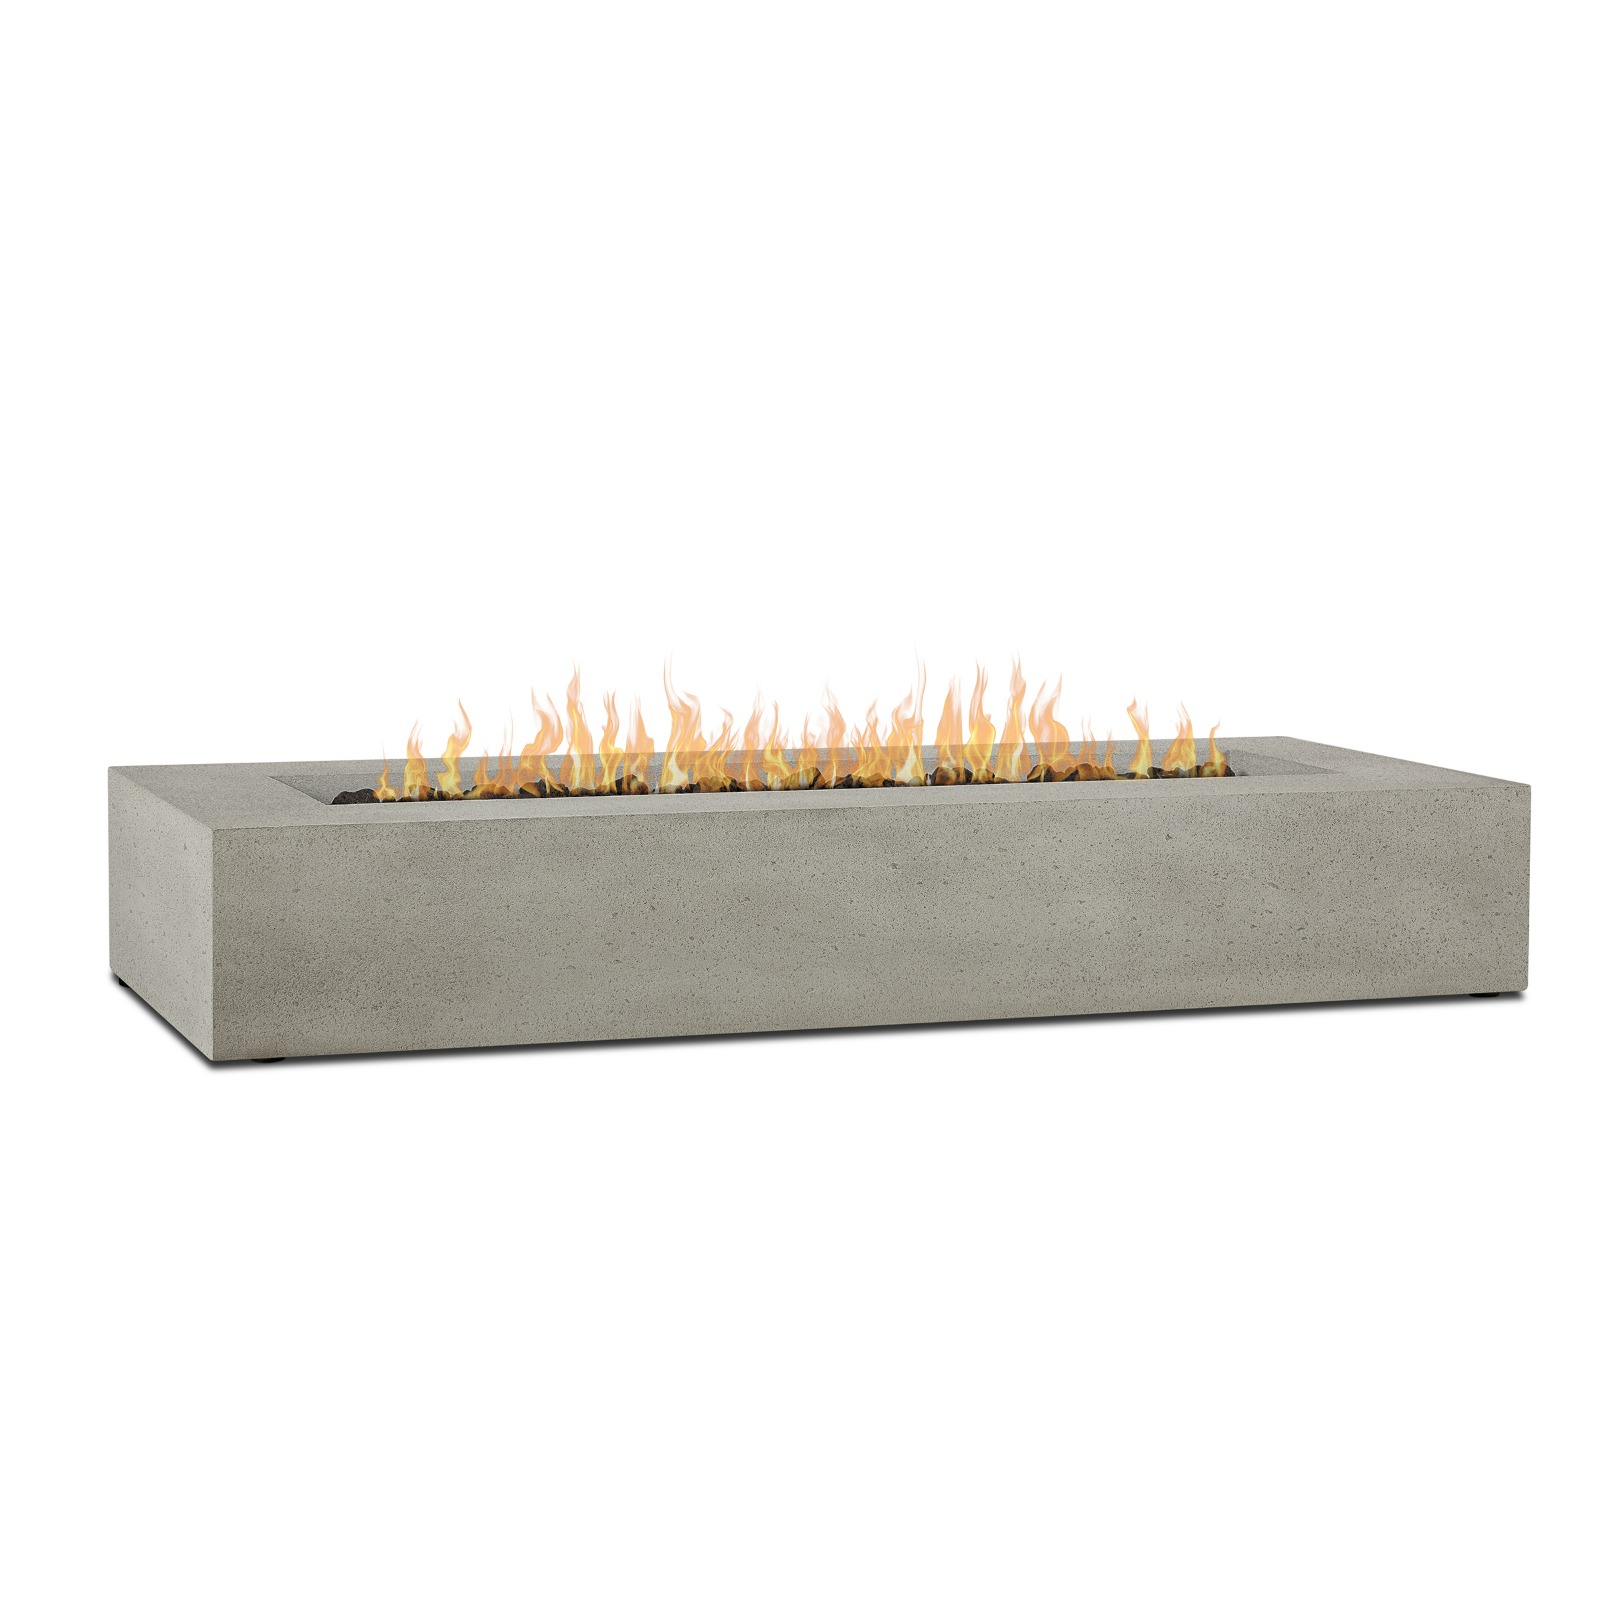 La Valle 72" Rectangle Propane Fire Table in flint on white